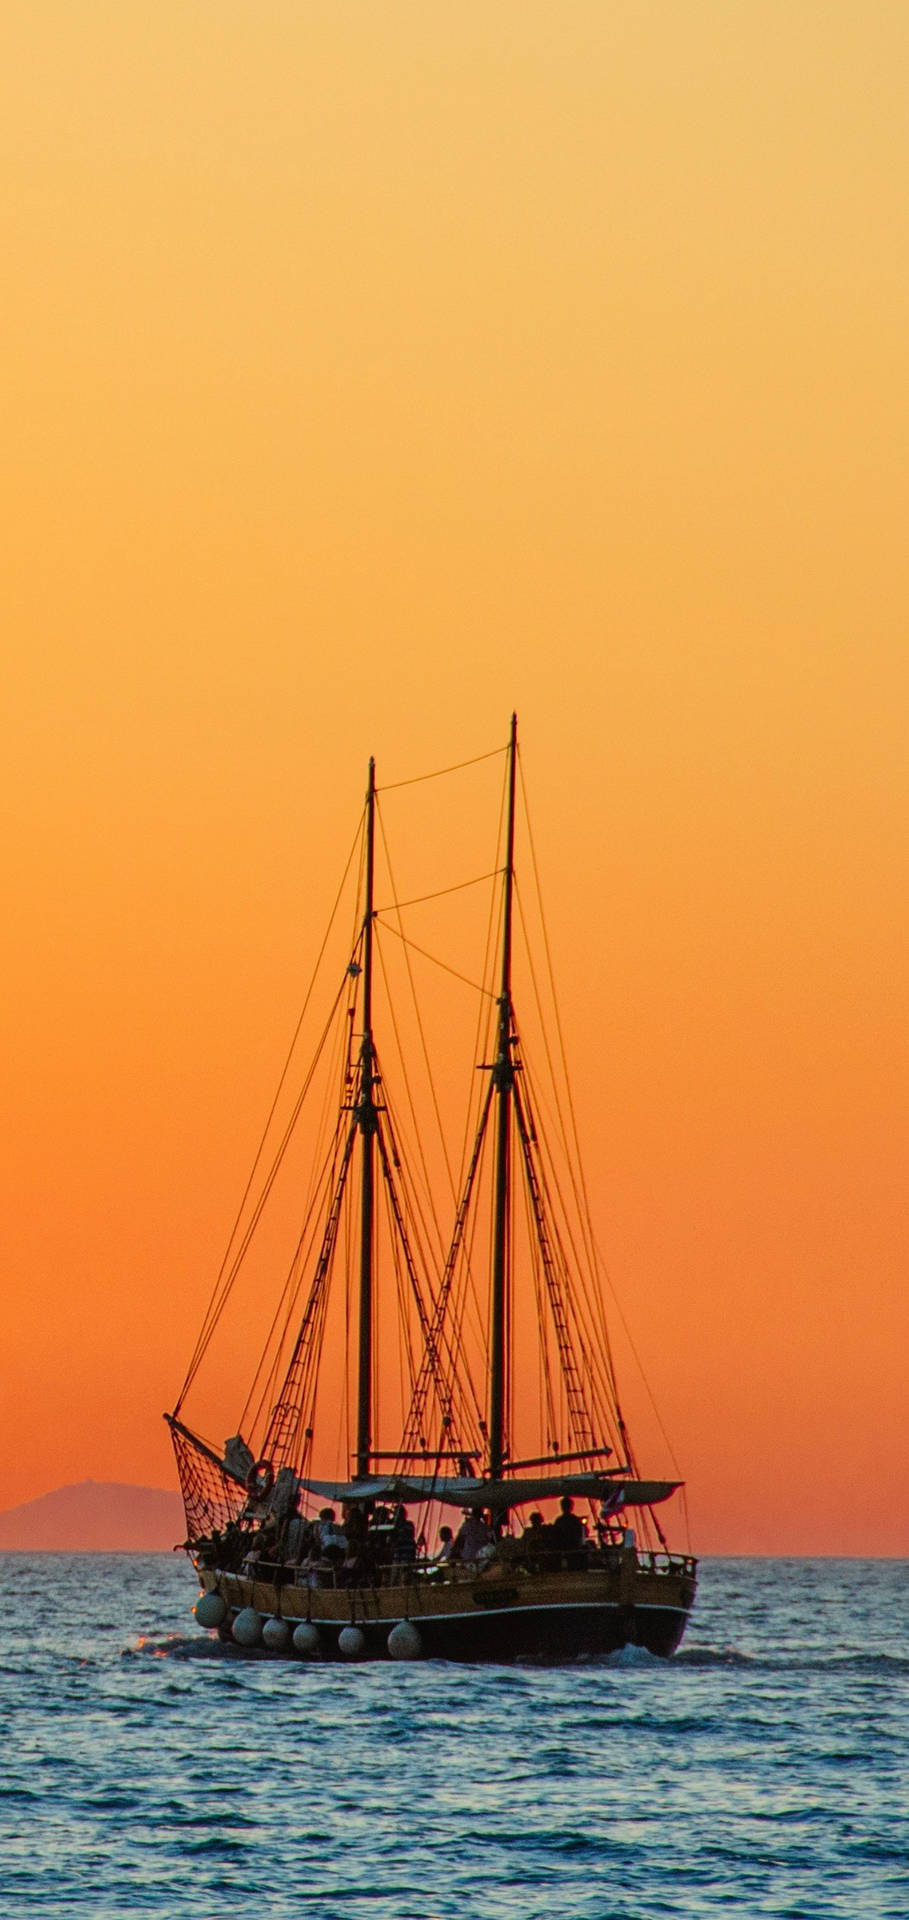 S10 Sailboat Orange Sky Background